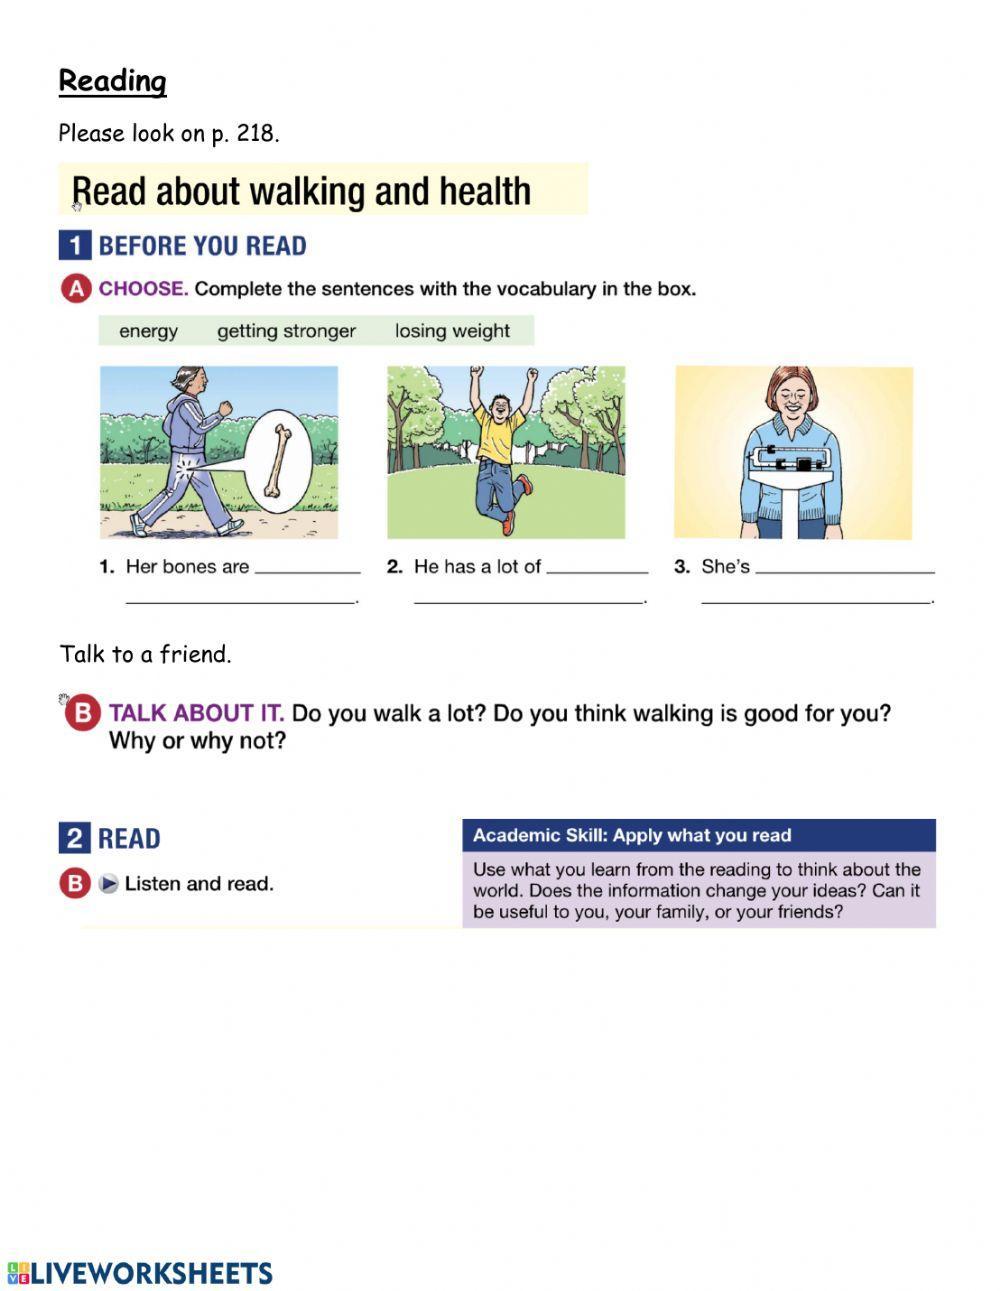 Walk Your Way to Good Health